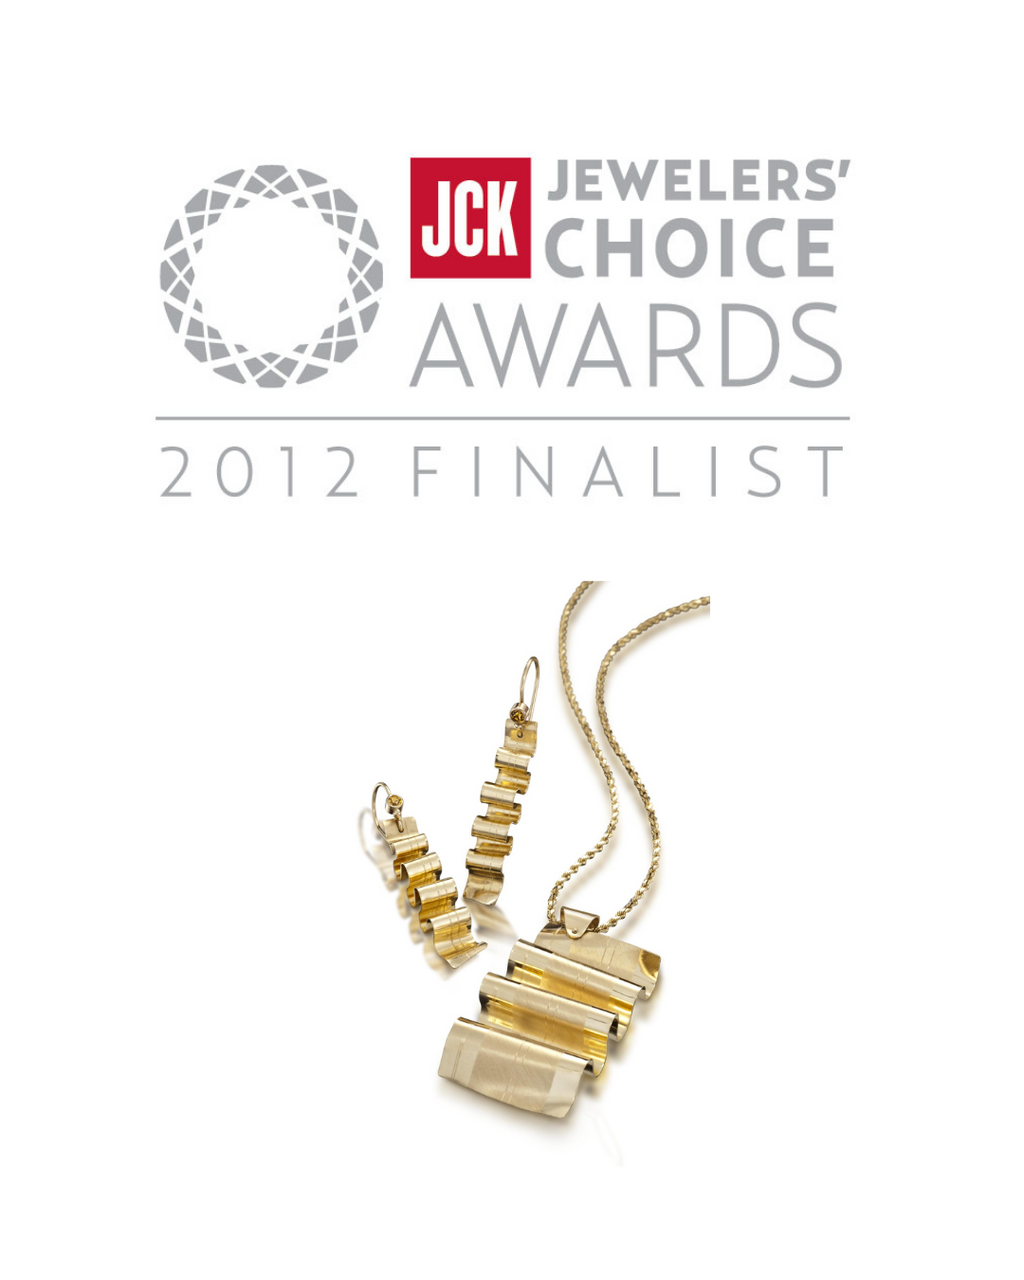 JCK Jewelers Choice Awards 2012 | Geralyn Sheridan Designs